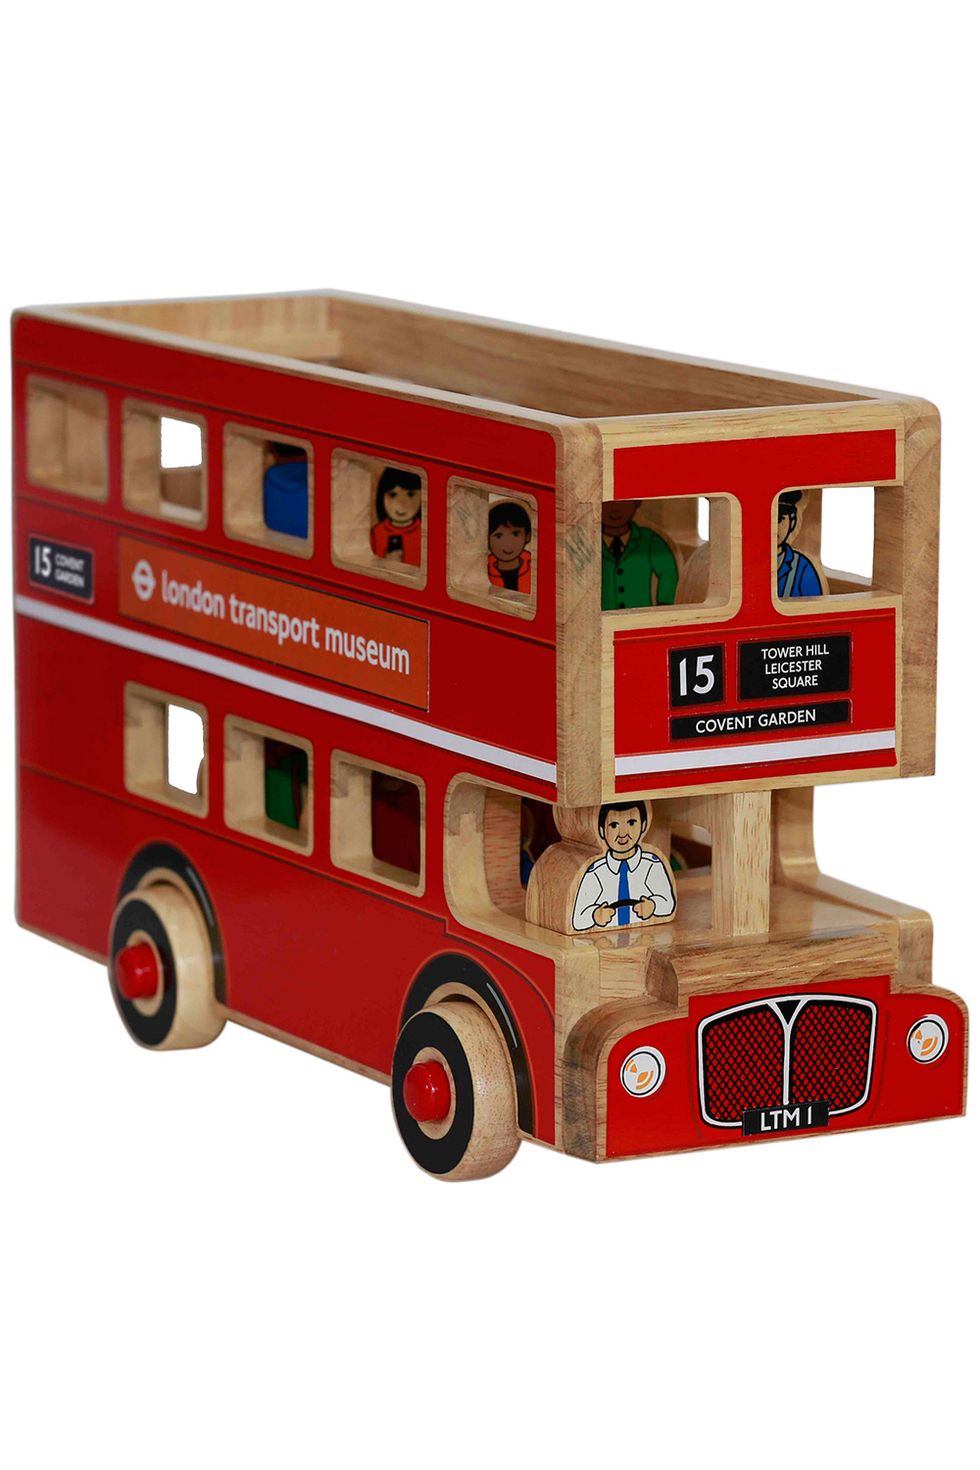 London Transport Museum toy wooden London bus